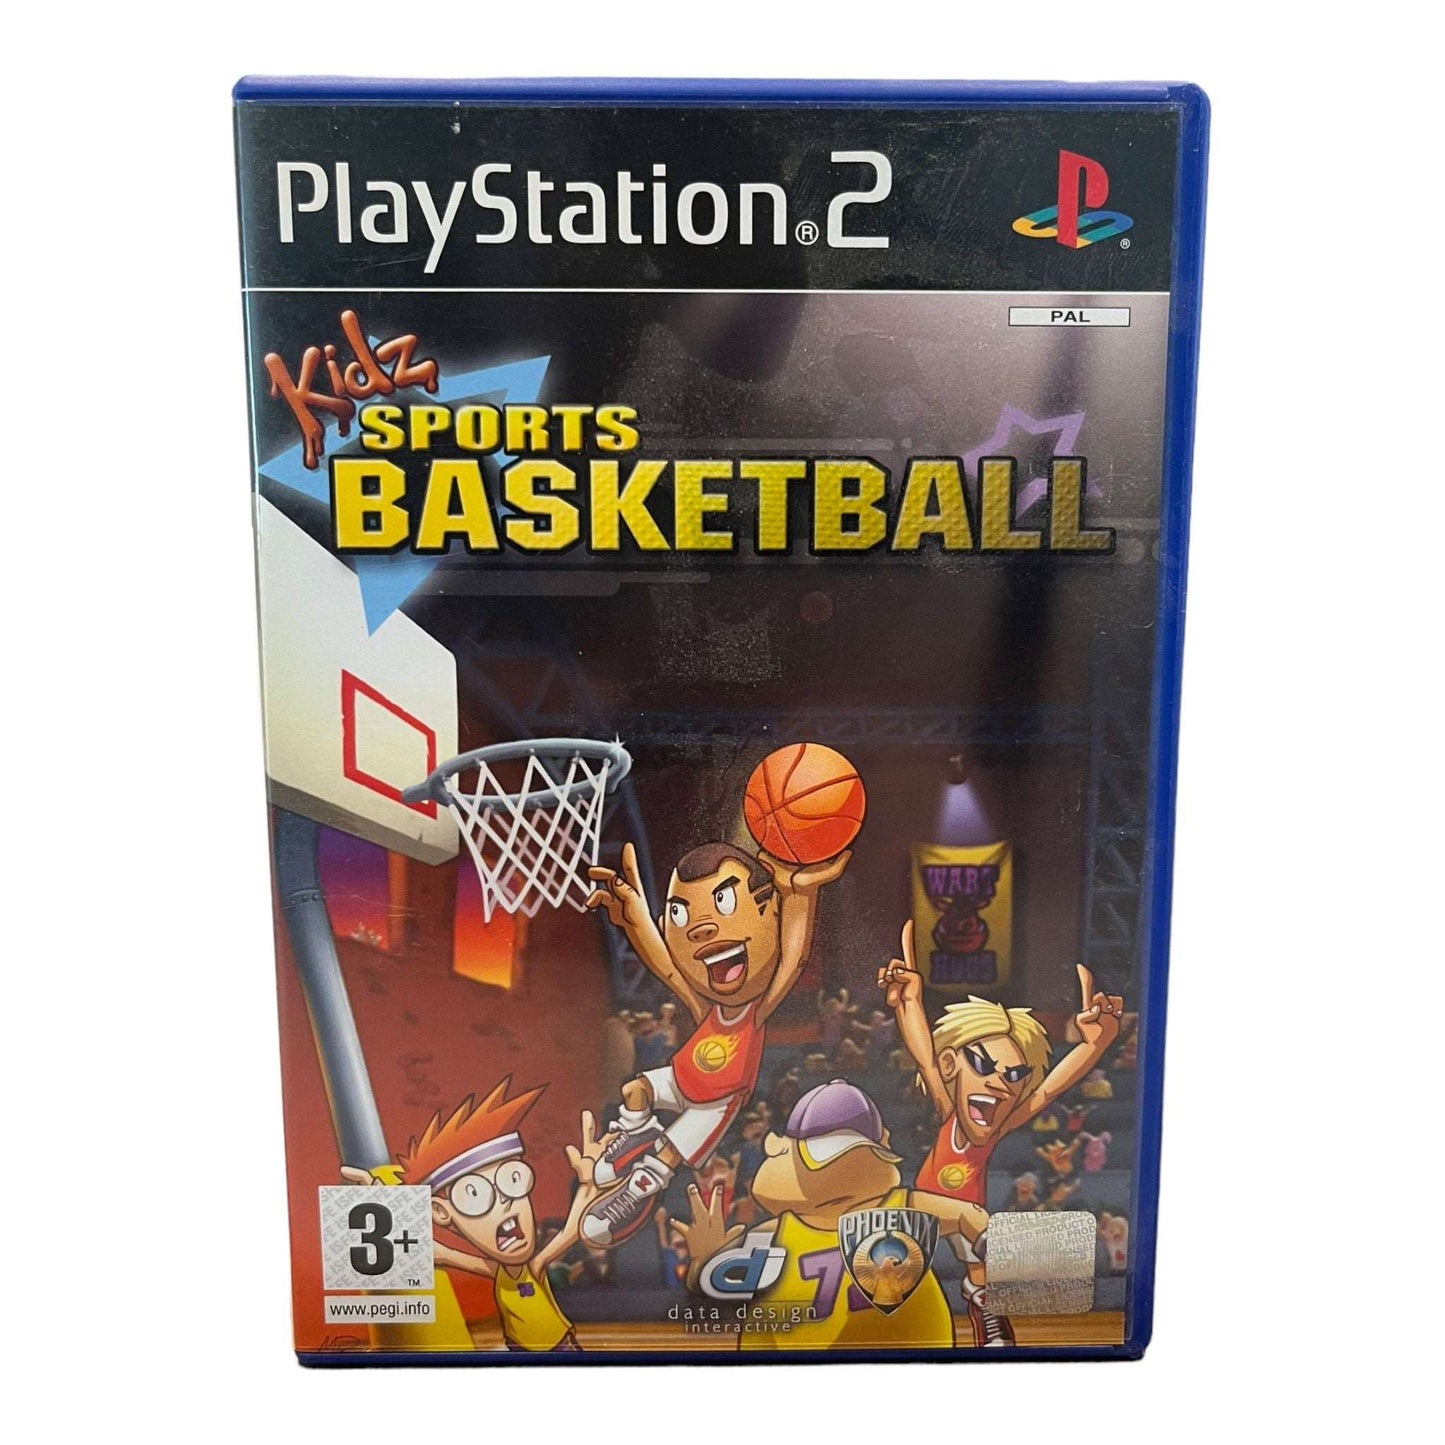 Kidz Sports Basketball - PS2